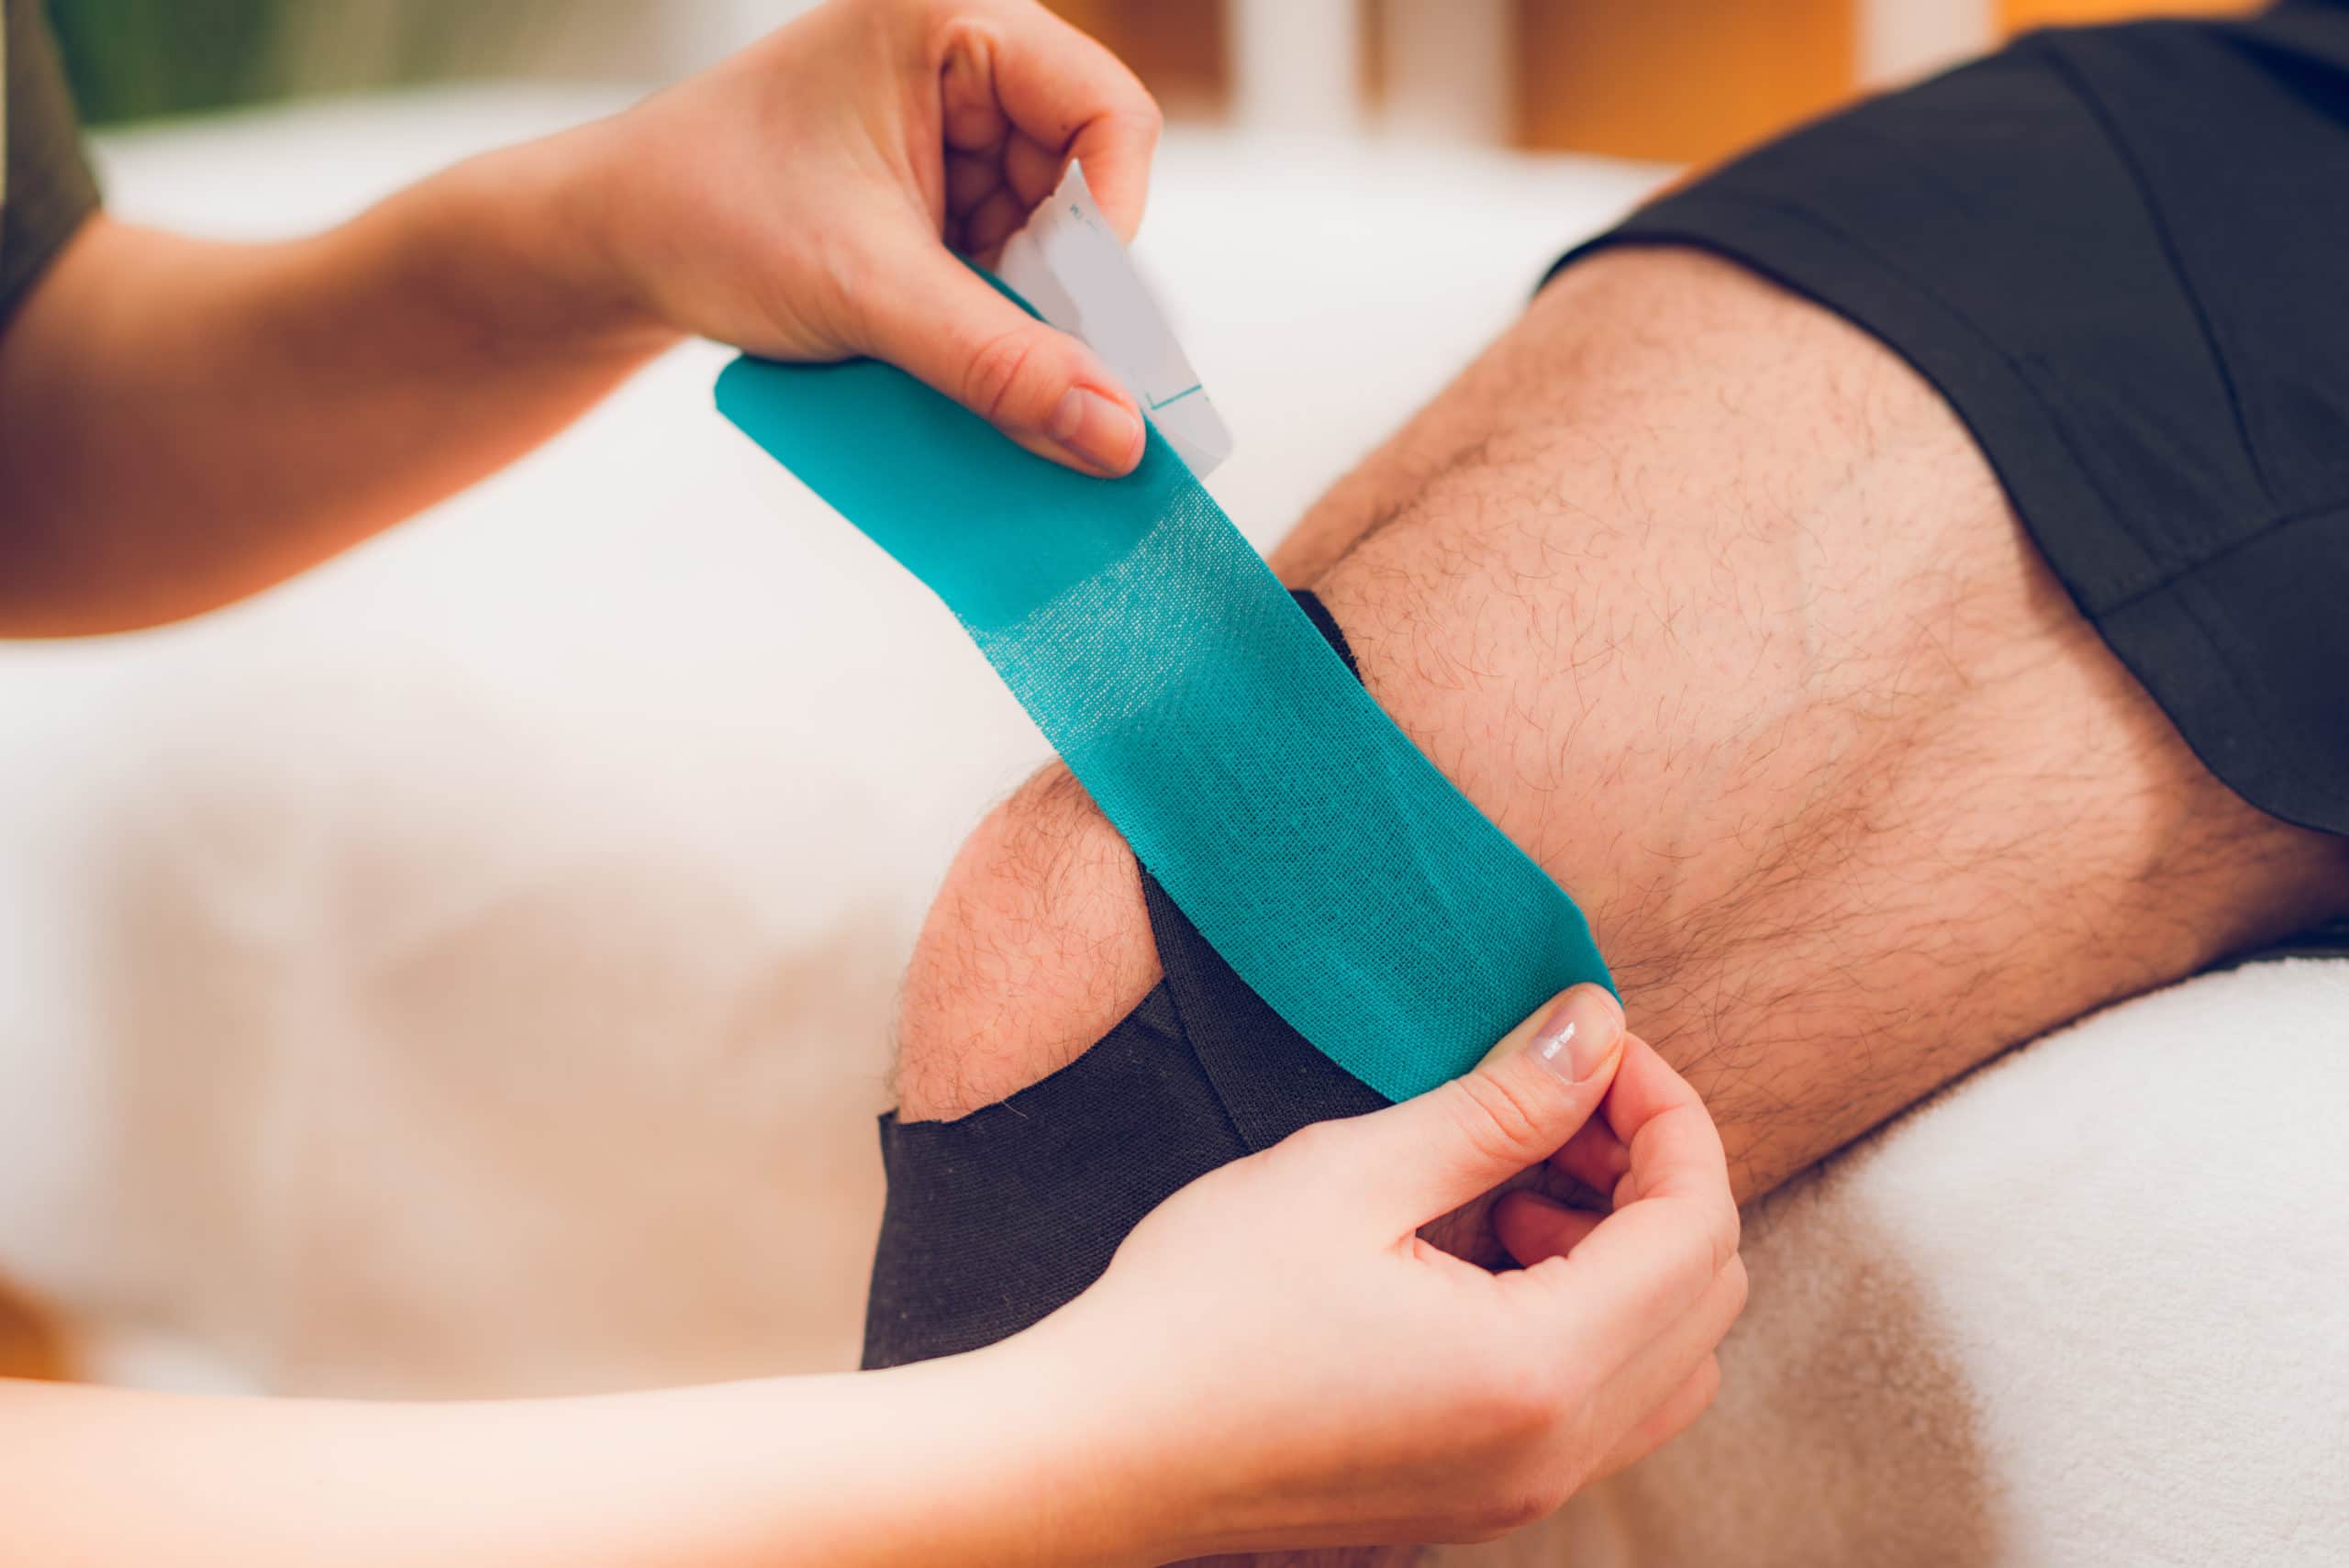 Knee treatment with kinesio tape